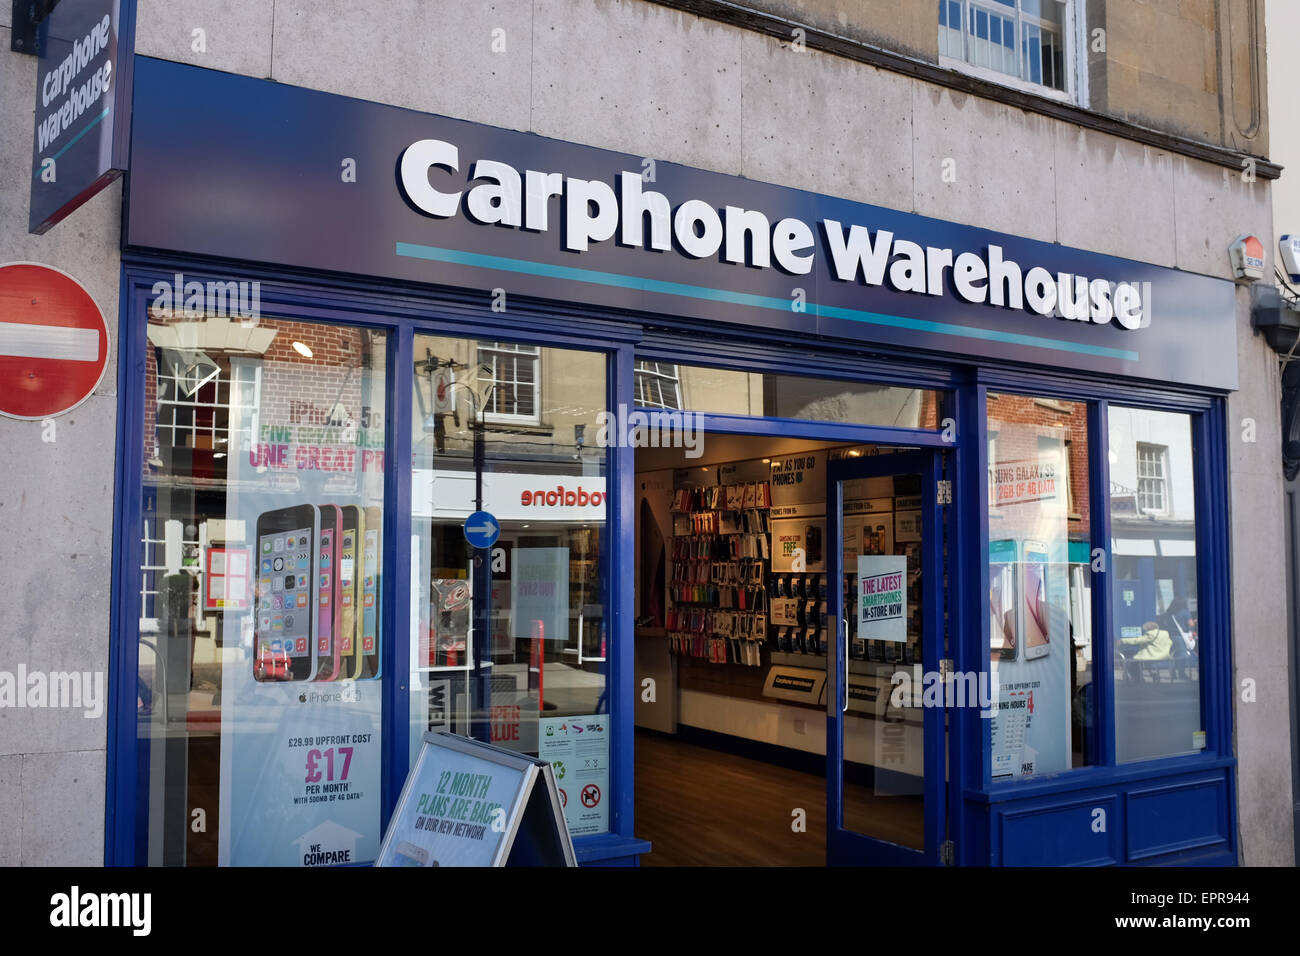 Carphone Warehouse mobile phone retailer. Stock Photo